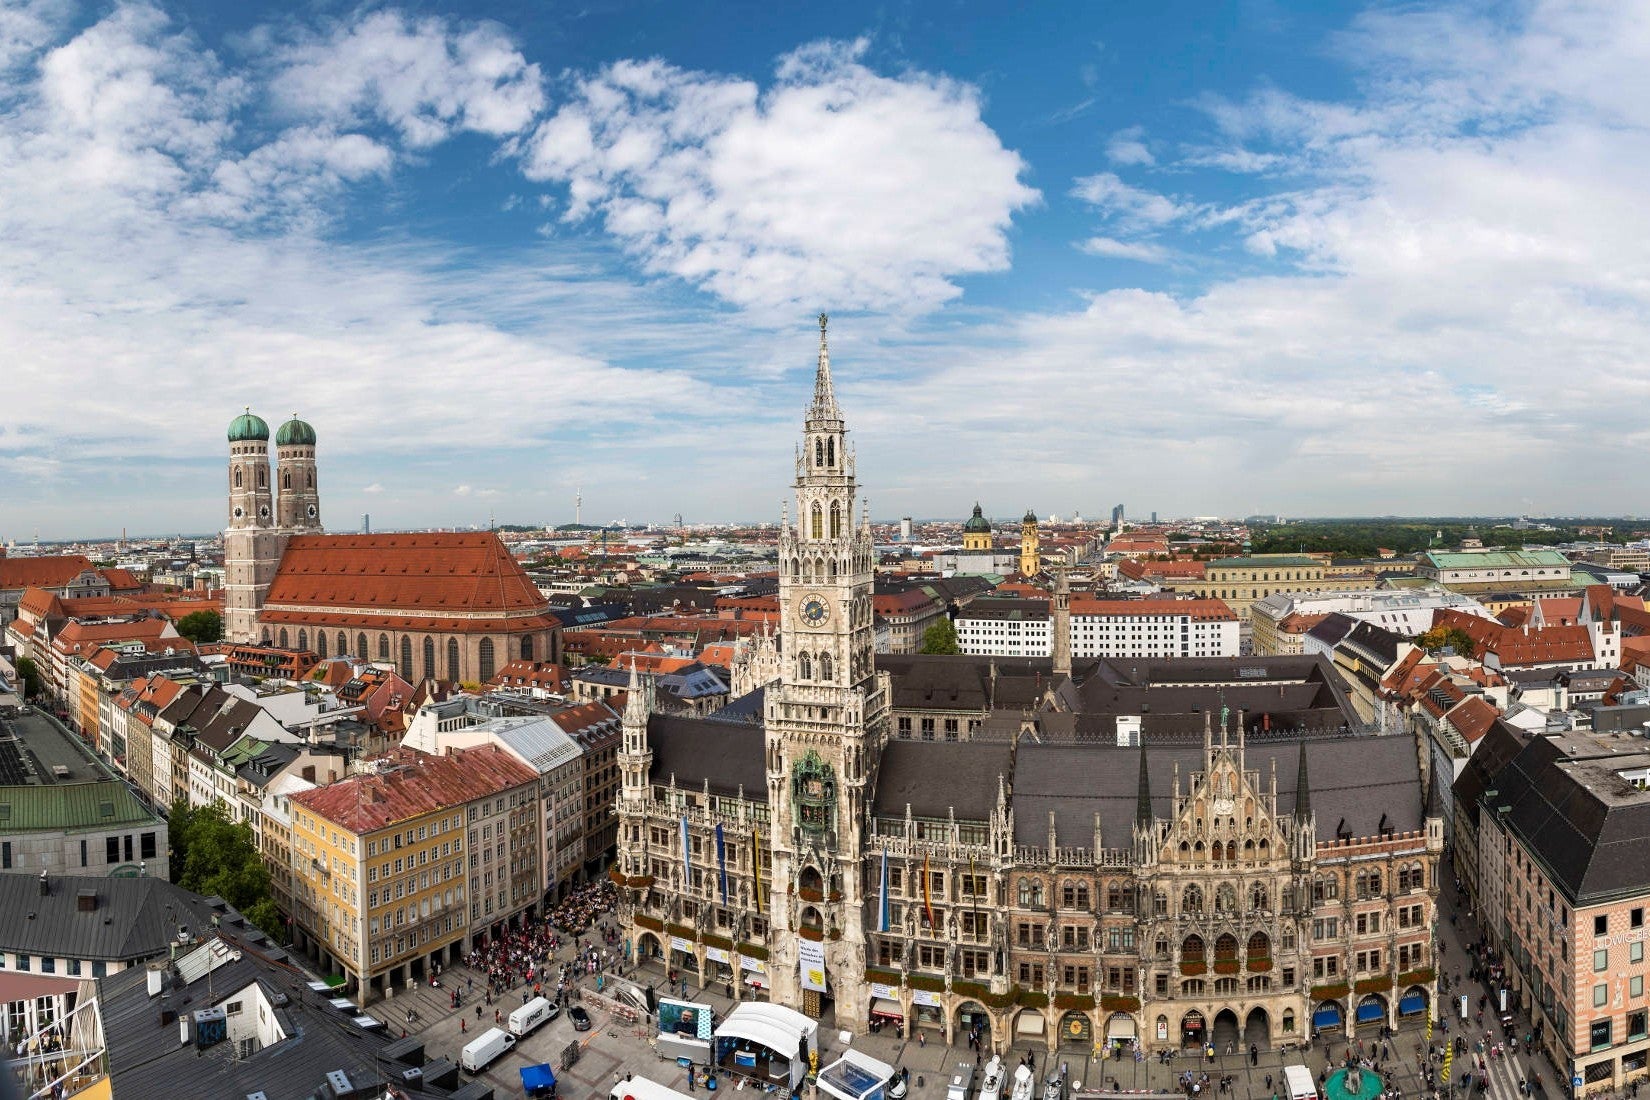 A panorama over Munich's Marienplatz